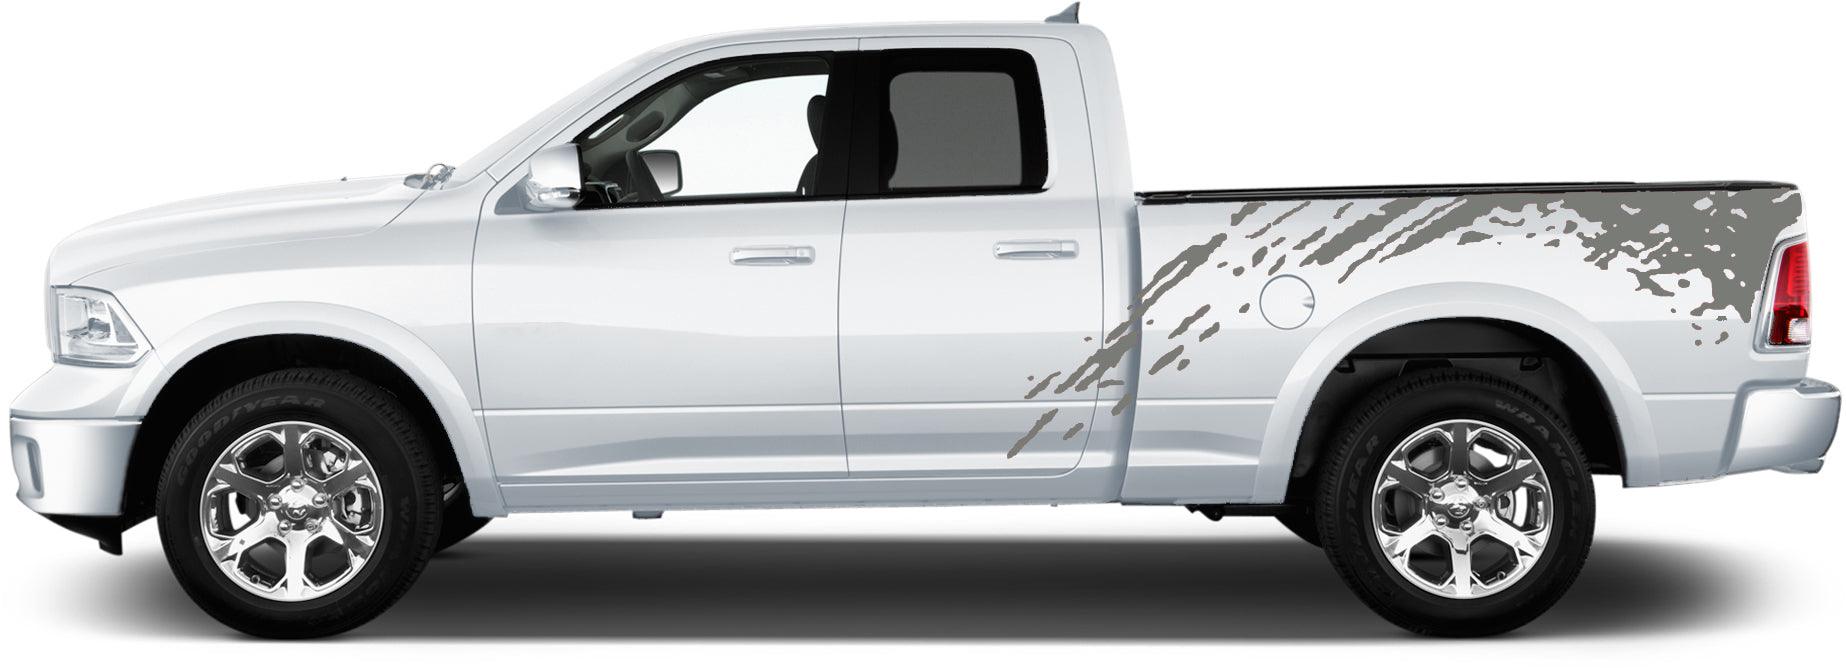 Dodge Ram 1500/2500/3500 (2009-2018) Custom Vinyl Decals, Graphics and Stickers - Mud Splash Bed Decal (Pair) - Jkprostickers